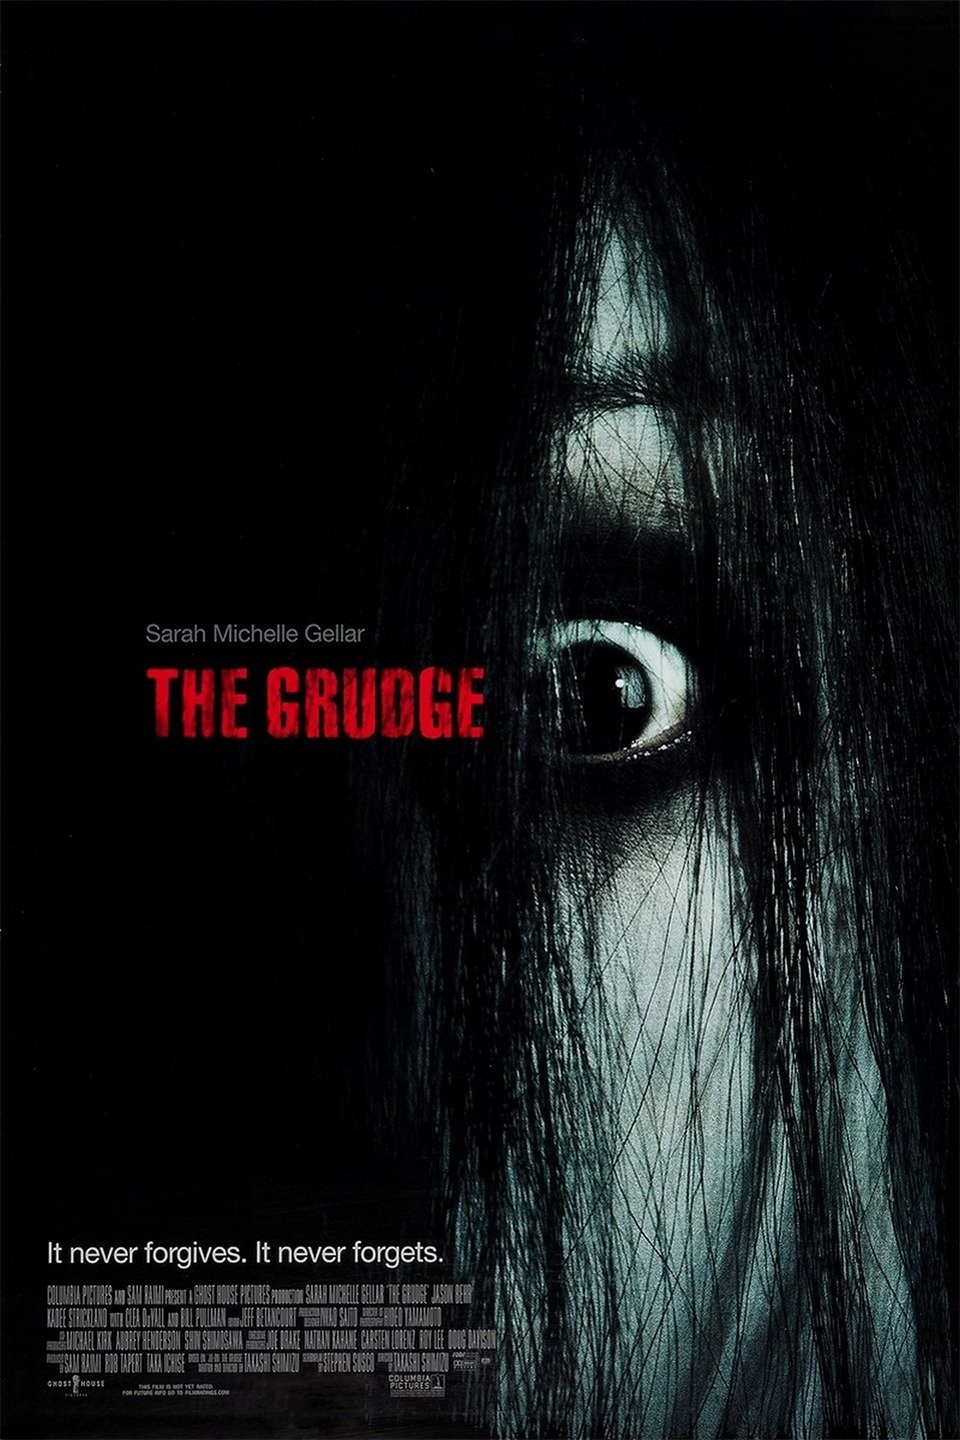 Creep (2004), Horror Film Wiki